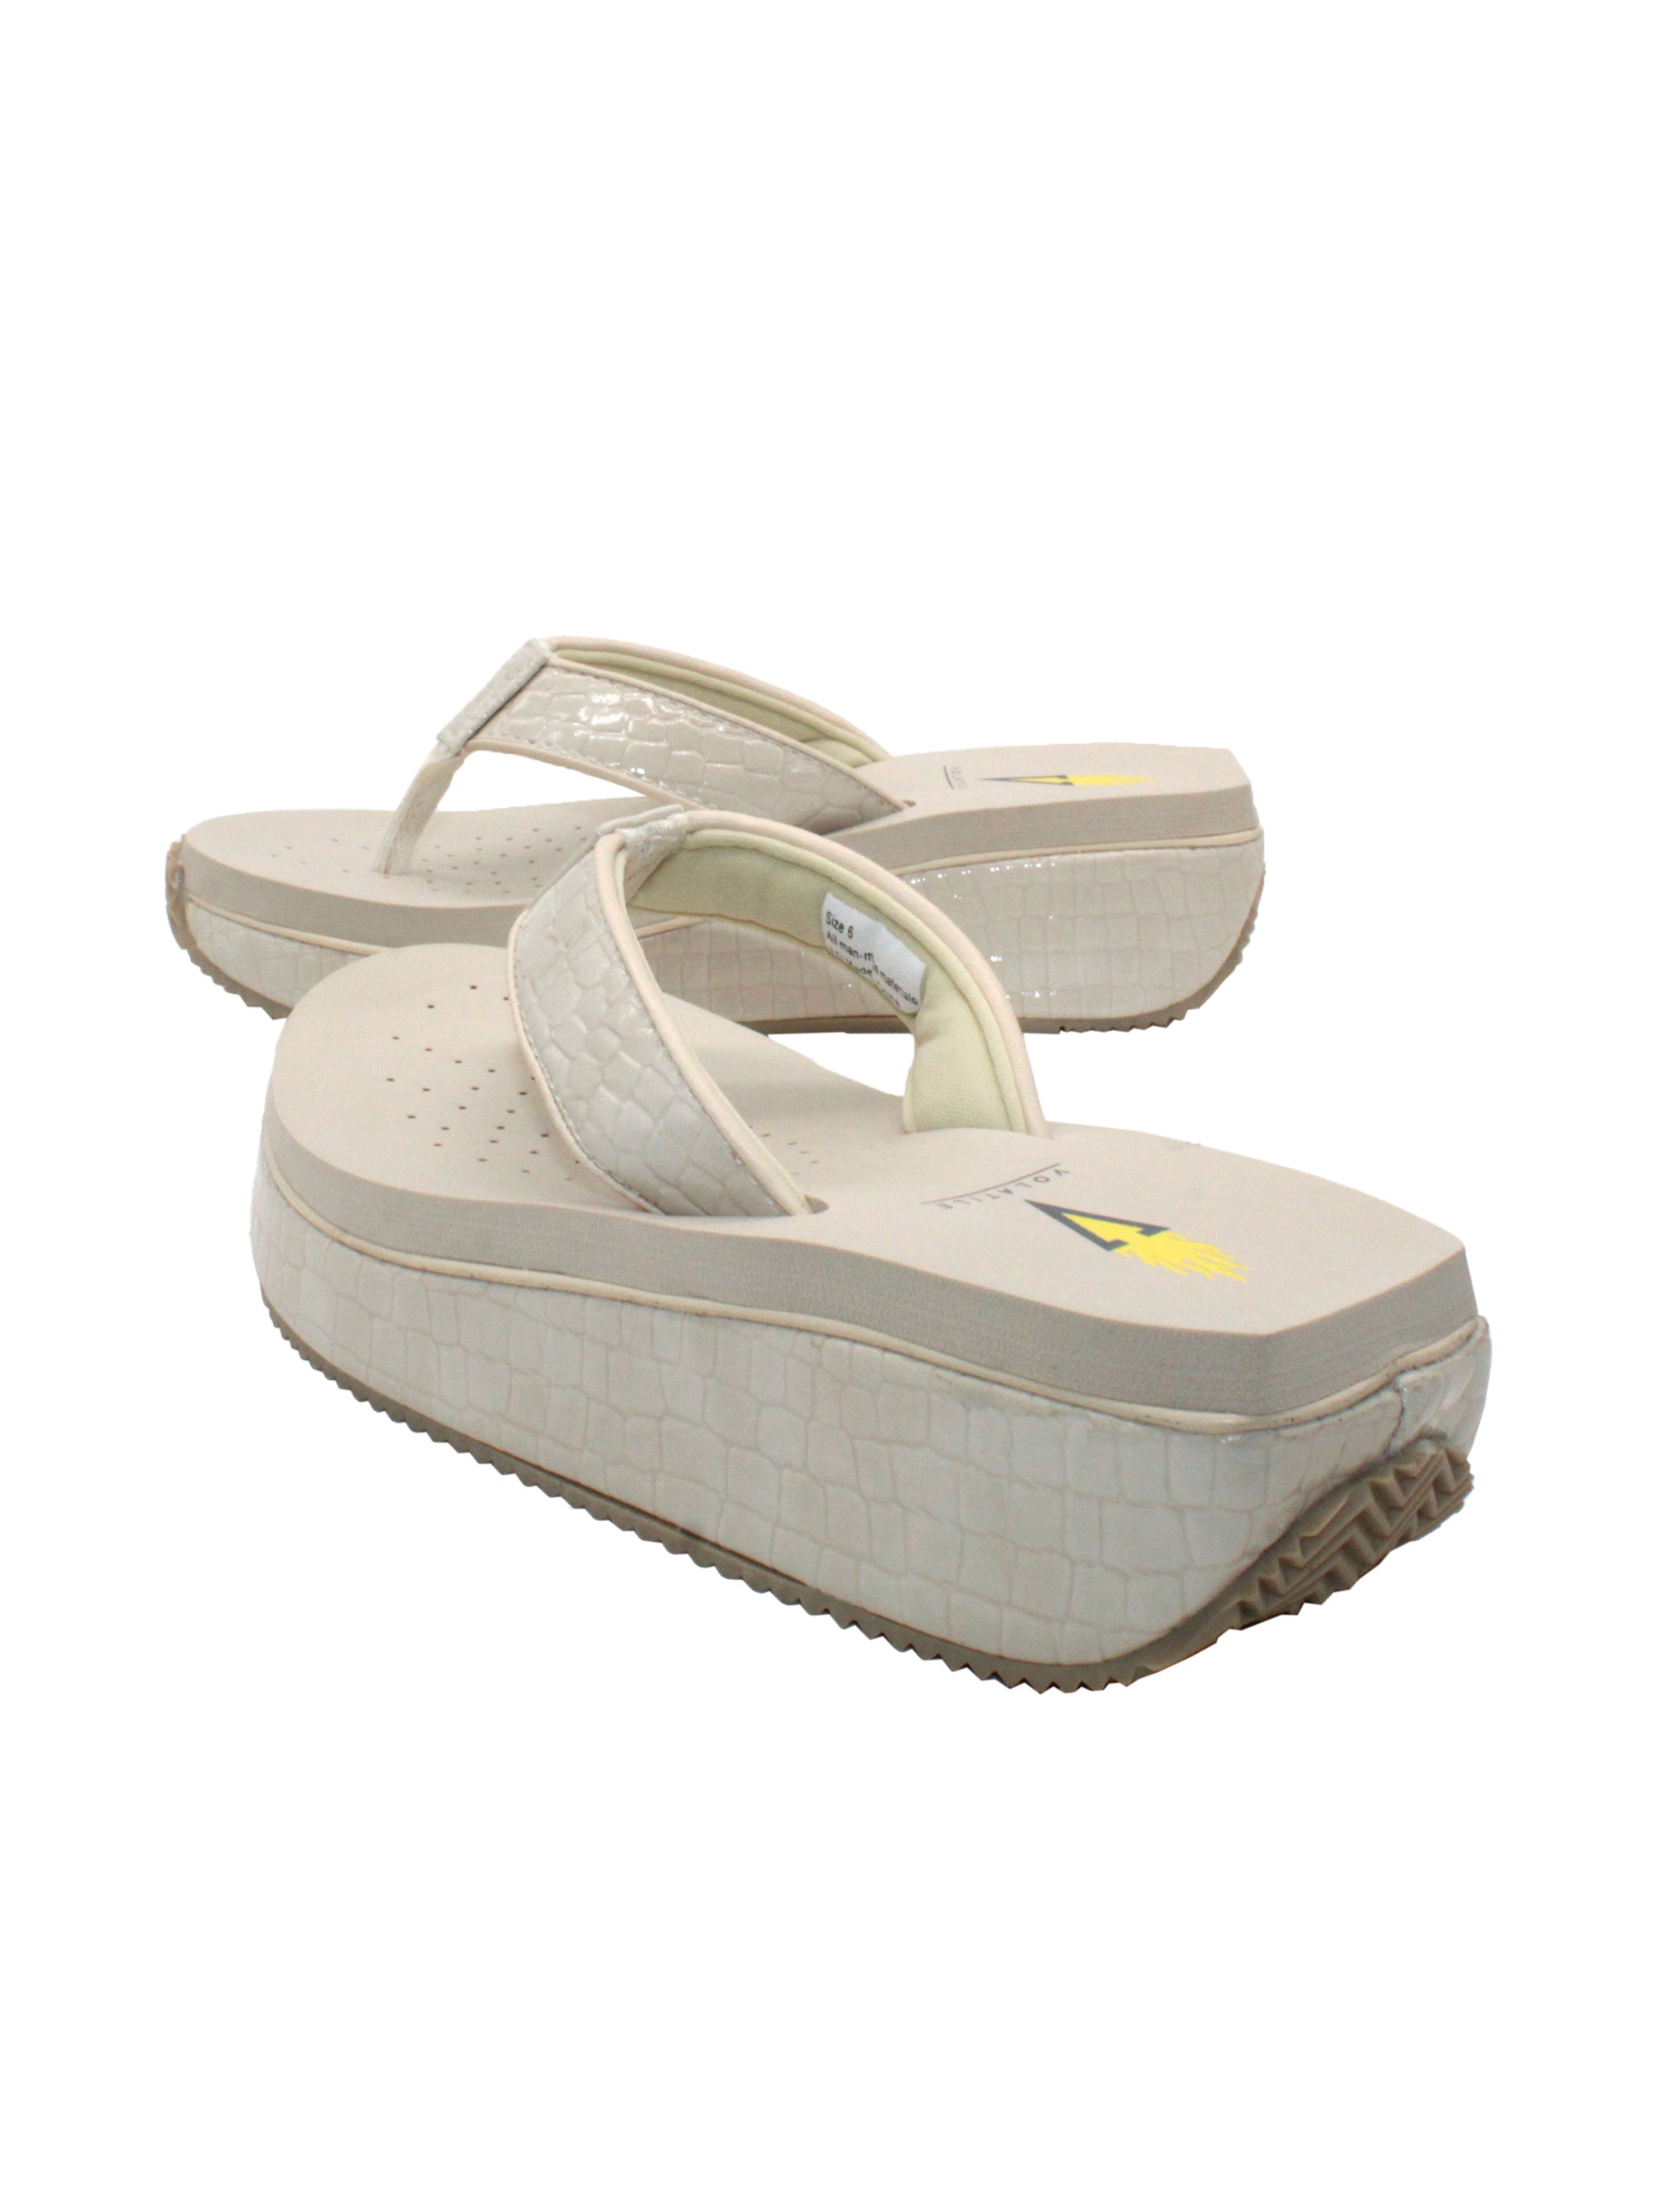 F-MODE Leather-Twist Flatform Toe-Post Sandals - Urban White (HG1-194) |  FitFlop Singapore